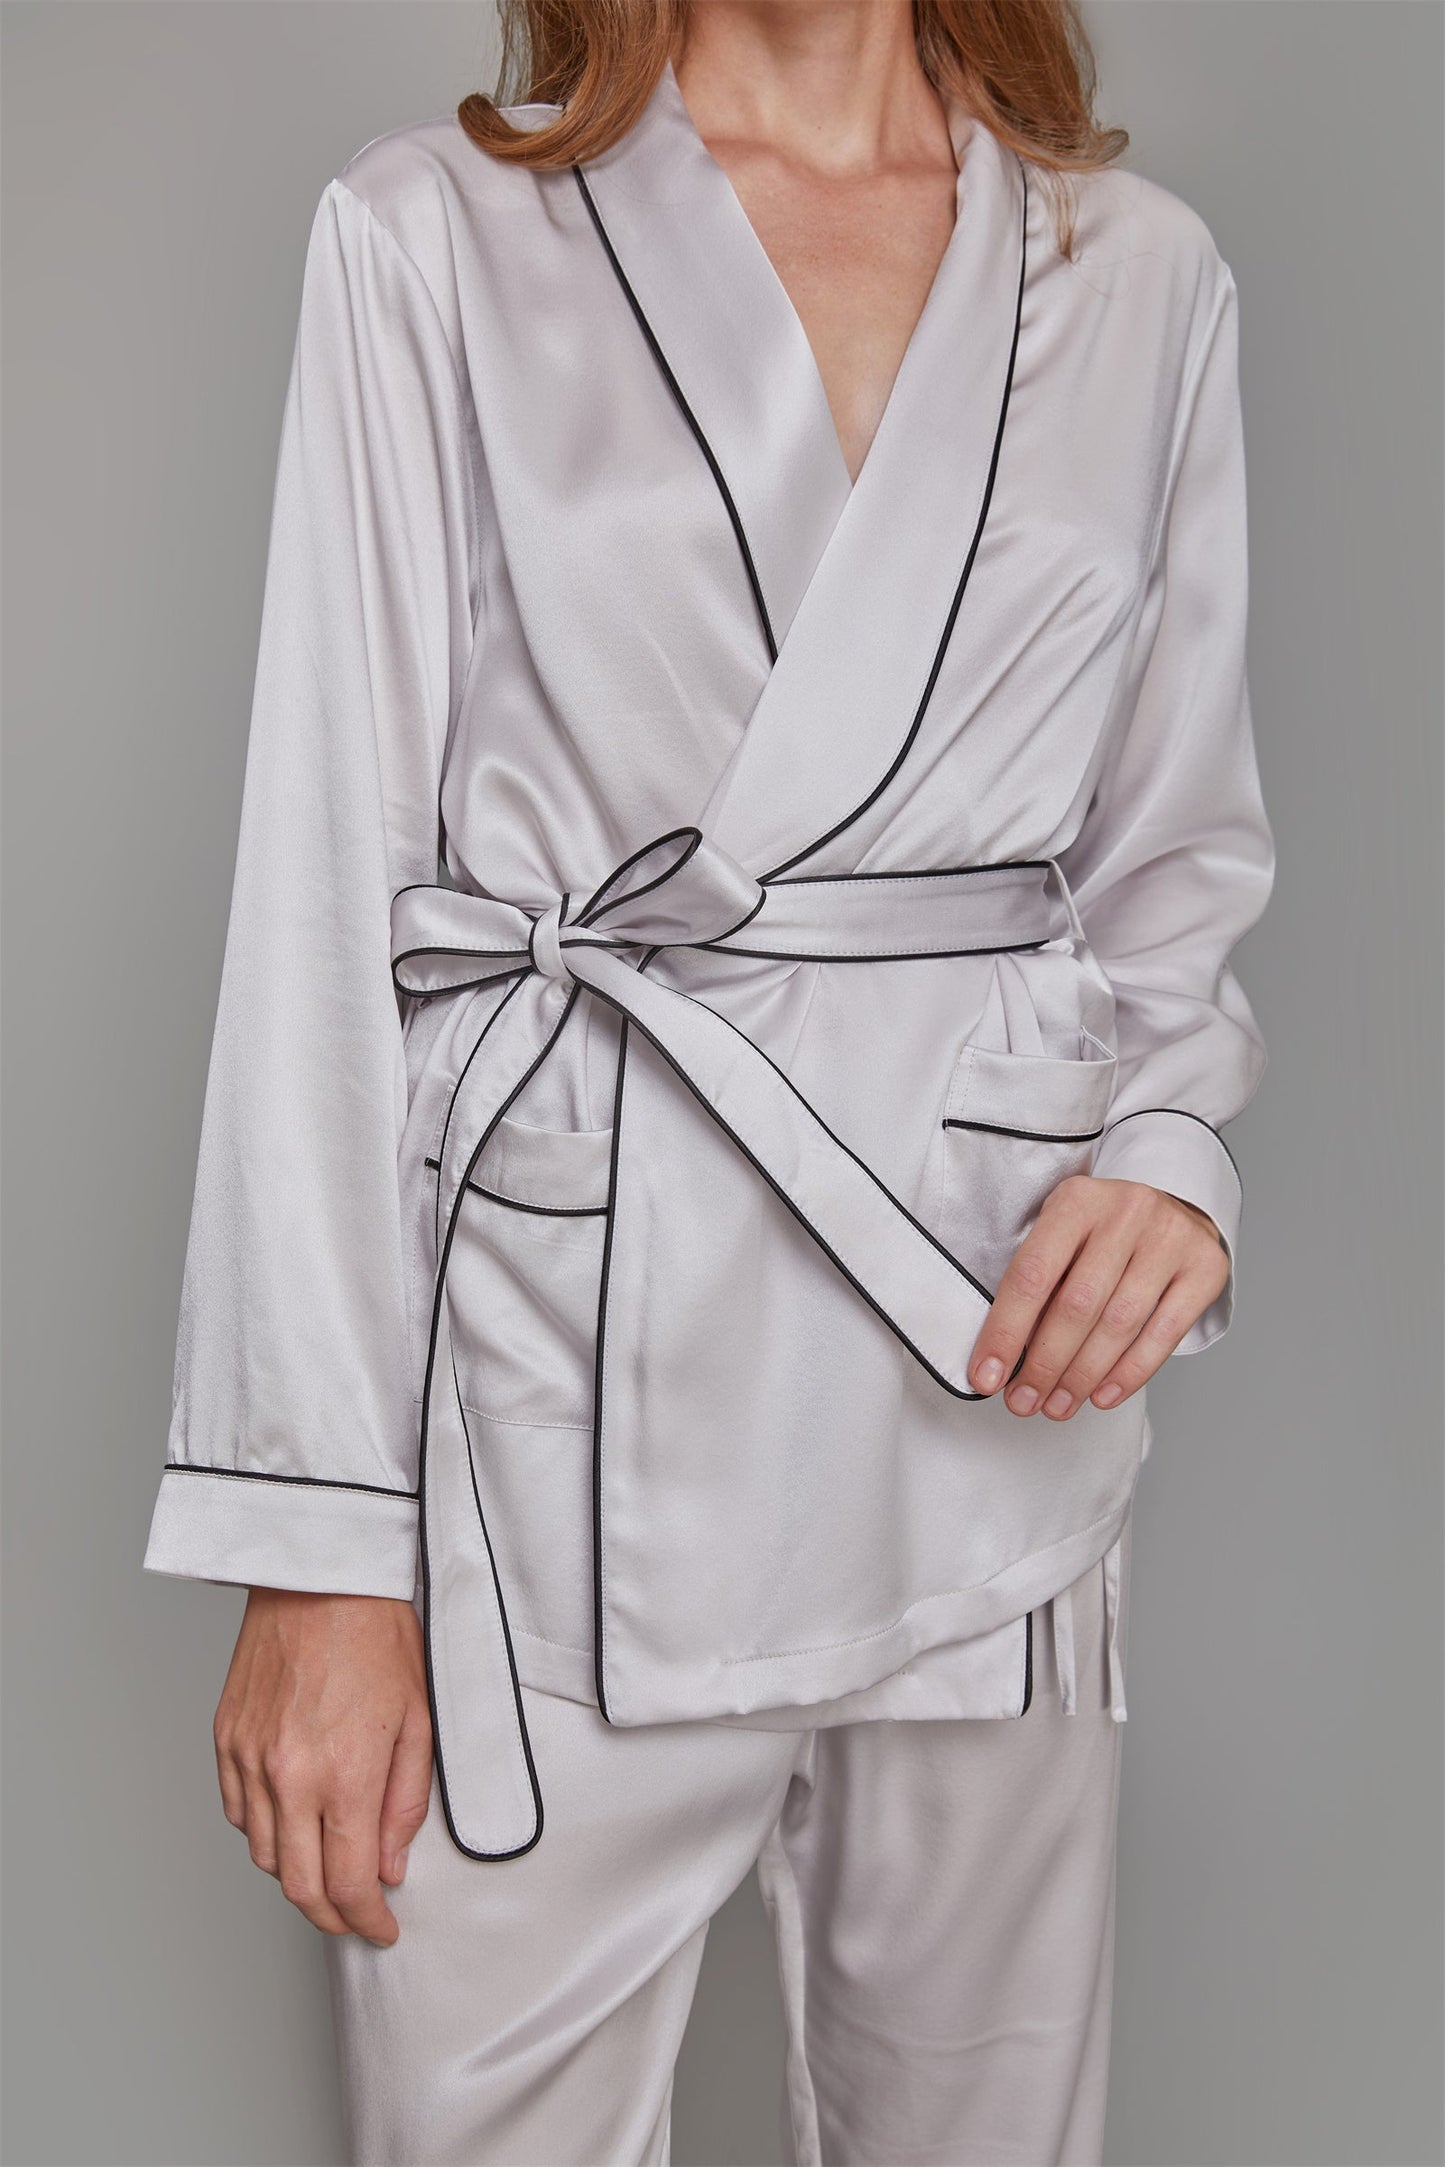 GRALACE Shawl Collar Trimmed Silk Robe